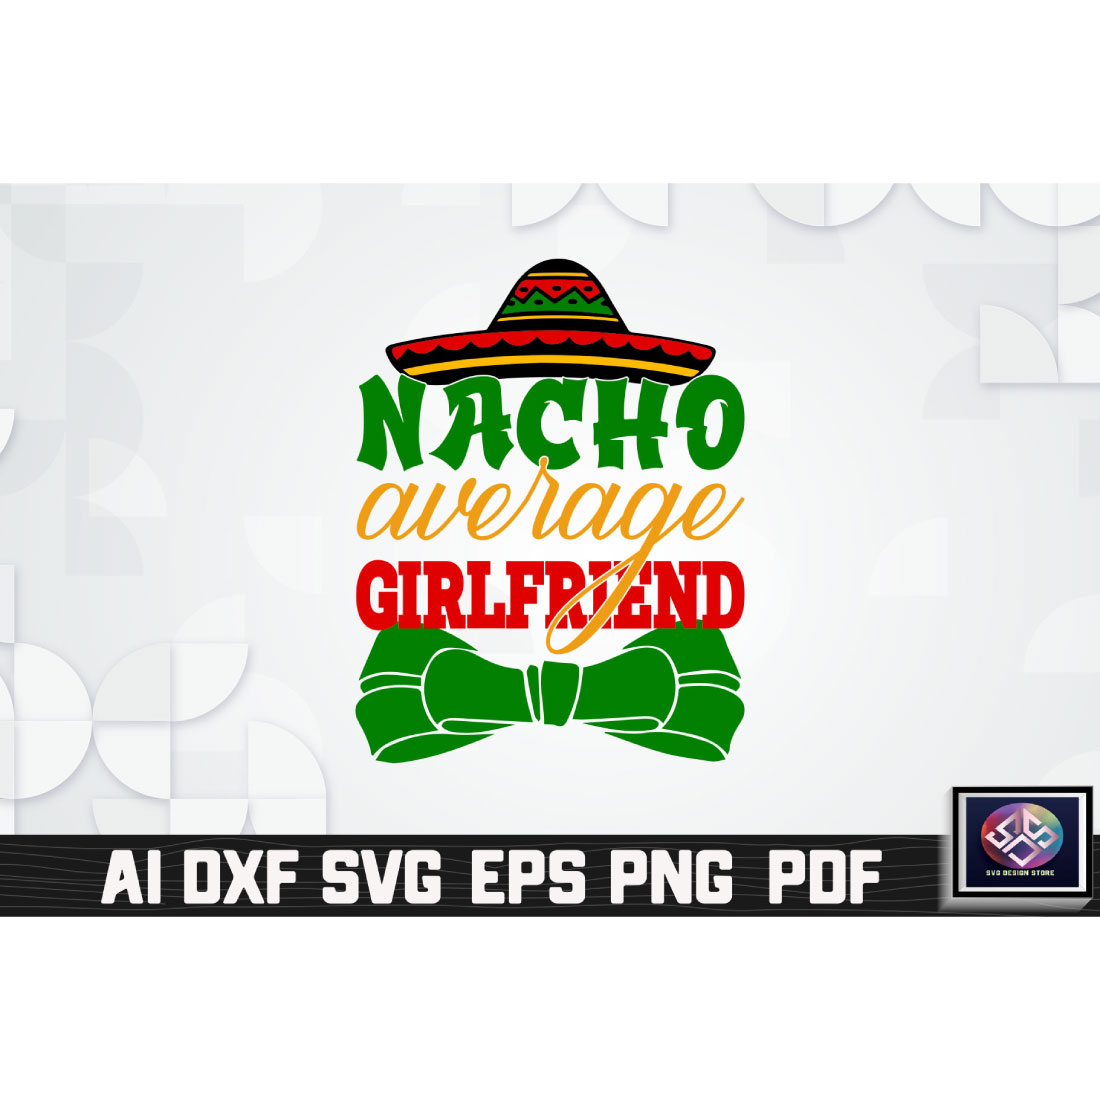 Nacho Average Girlfriend cover image.